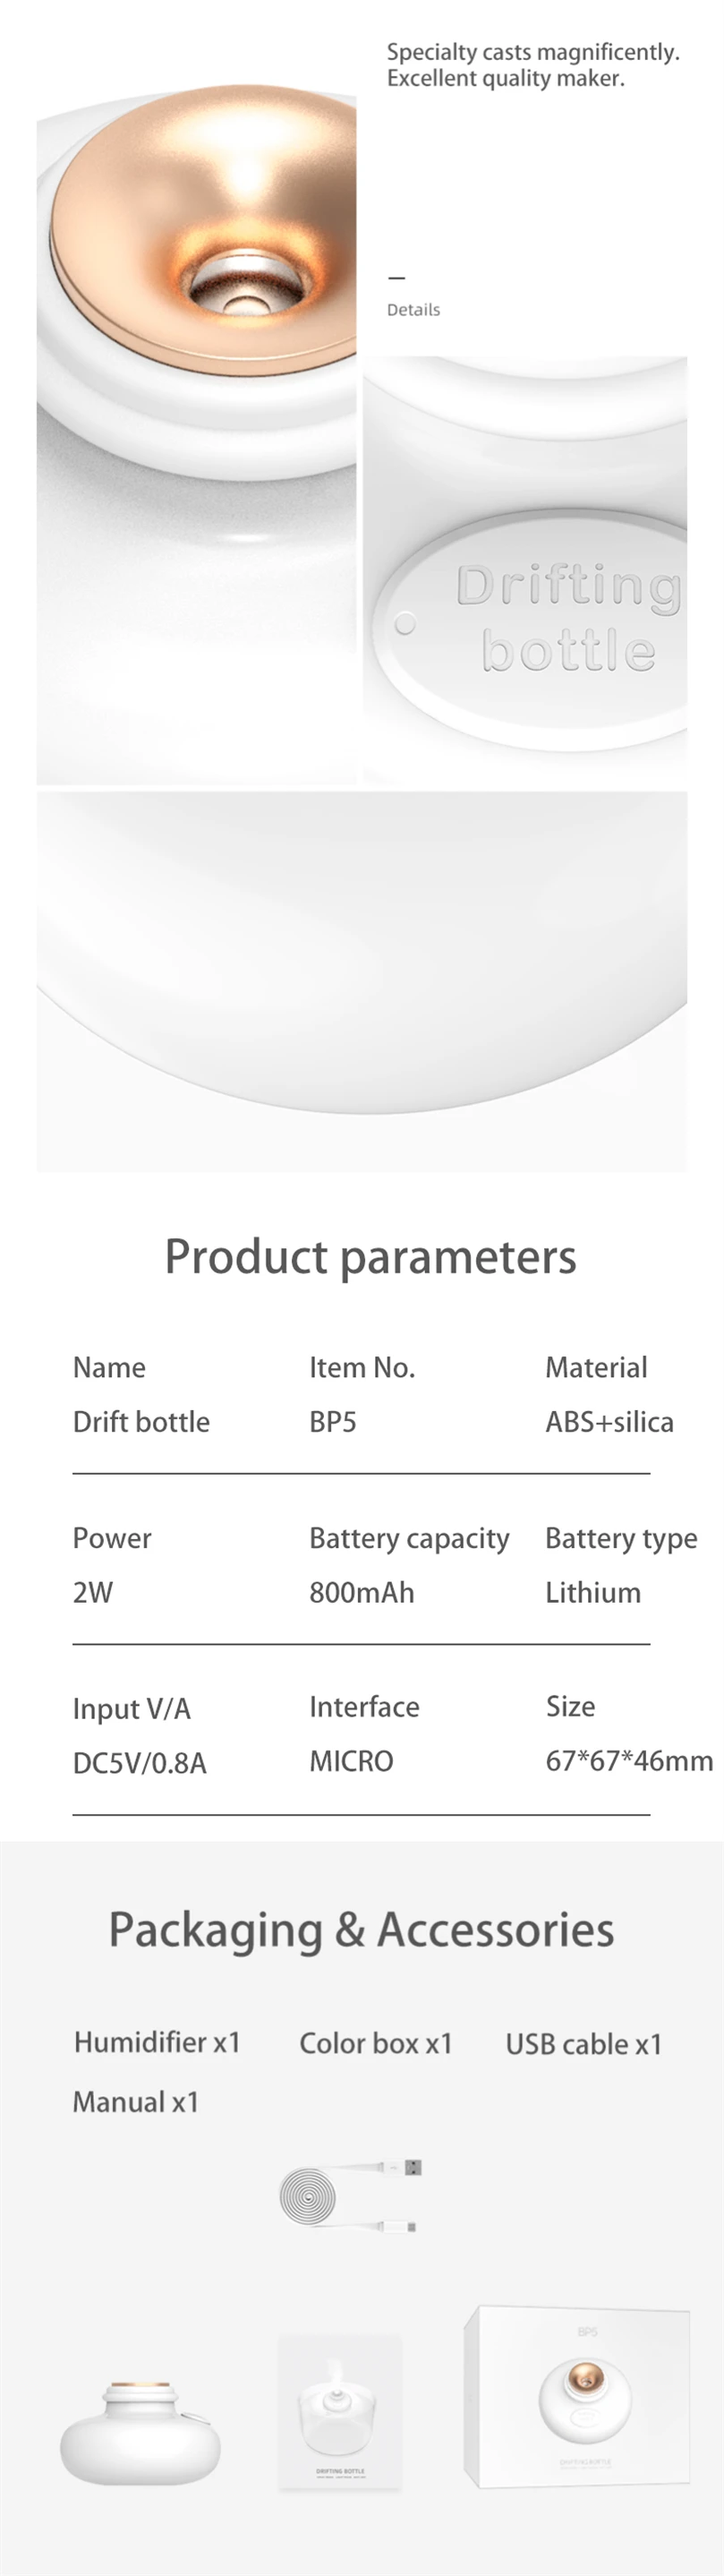 Mini Portable Draft Bottle Humidifier Rechargeable USB Air Ultrasonic Humidifier